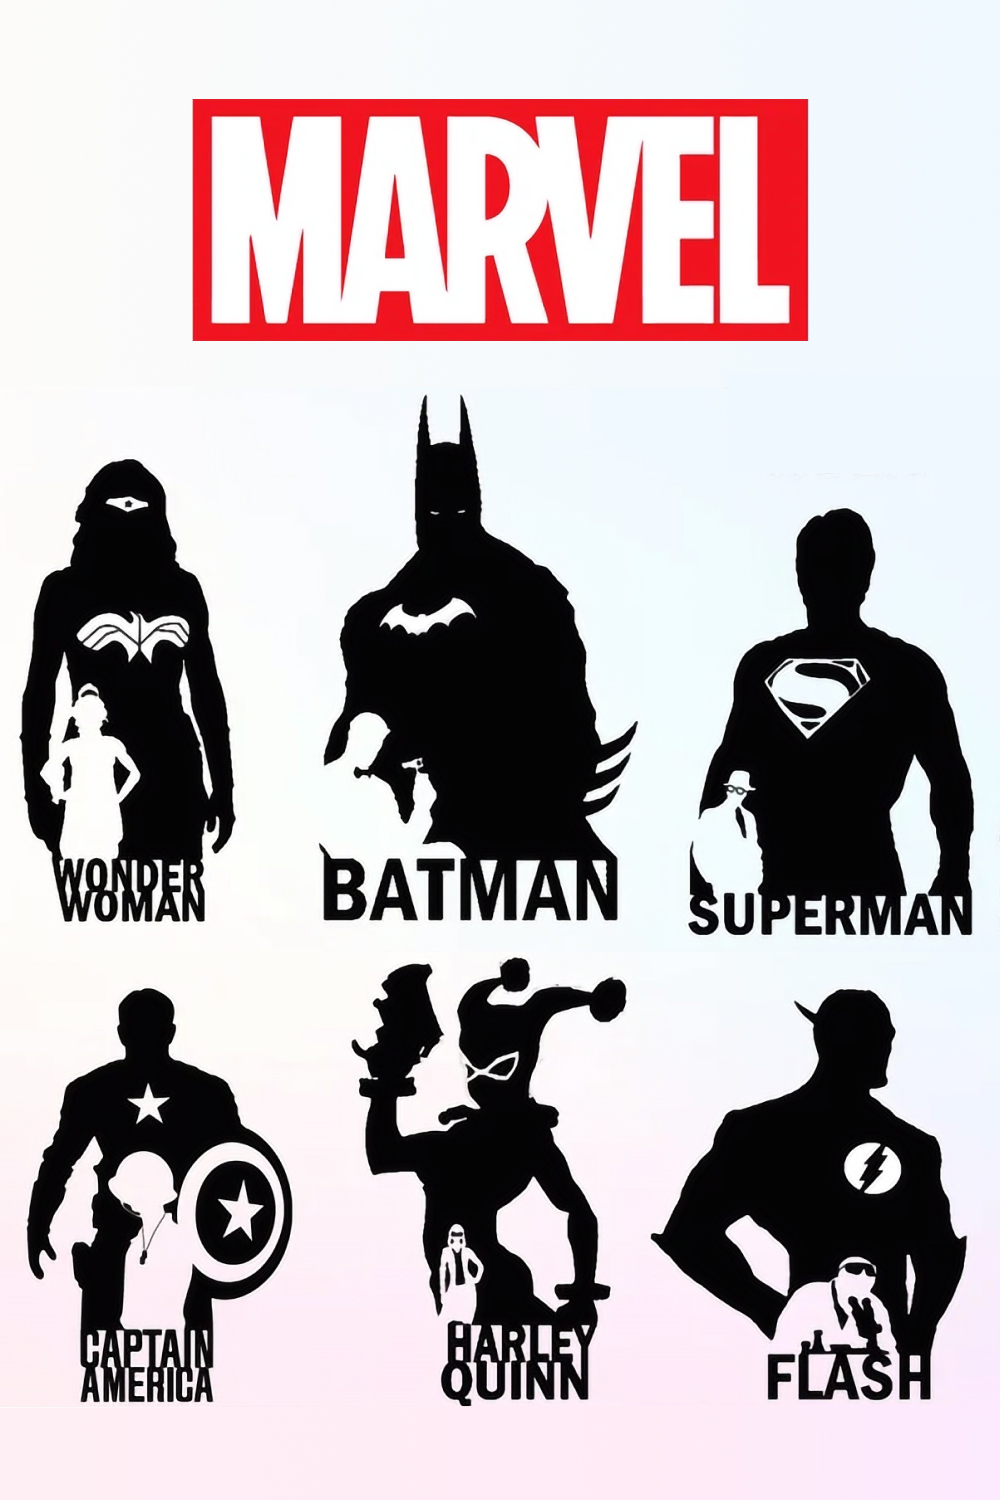 Superman, Harley Quinn, Flash black and white.